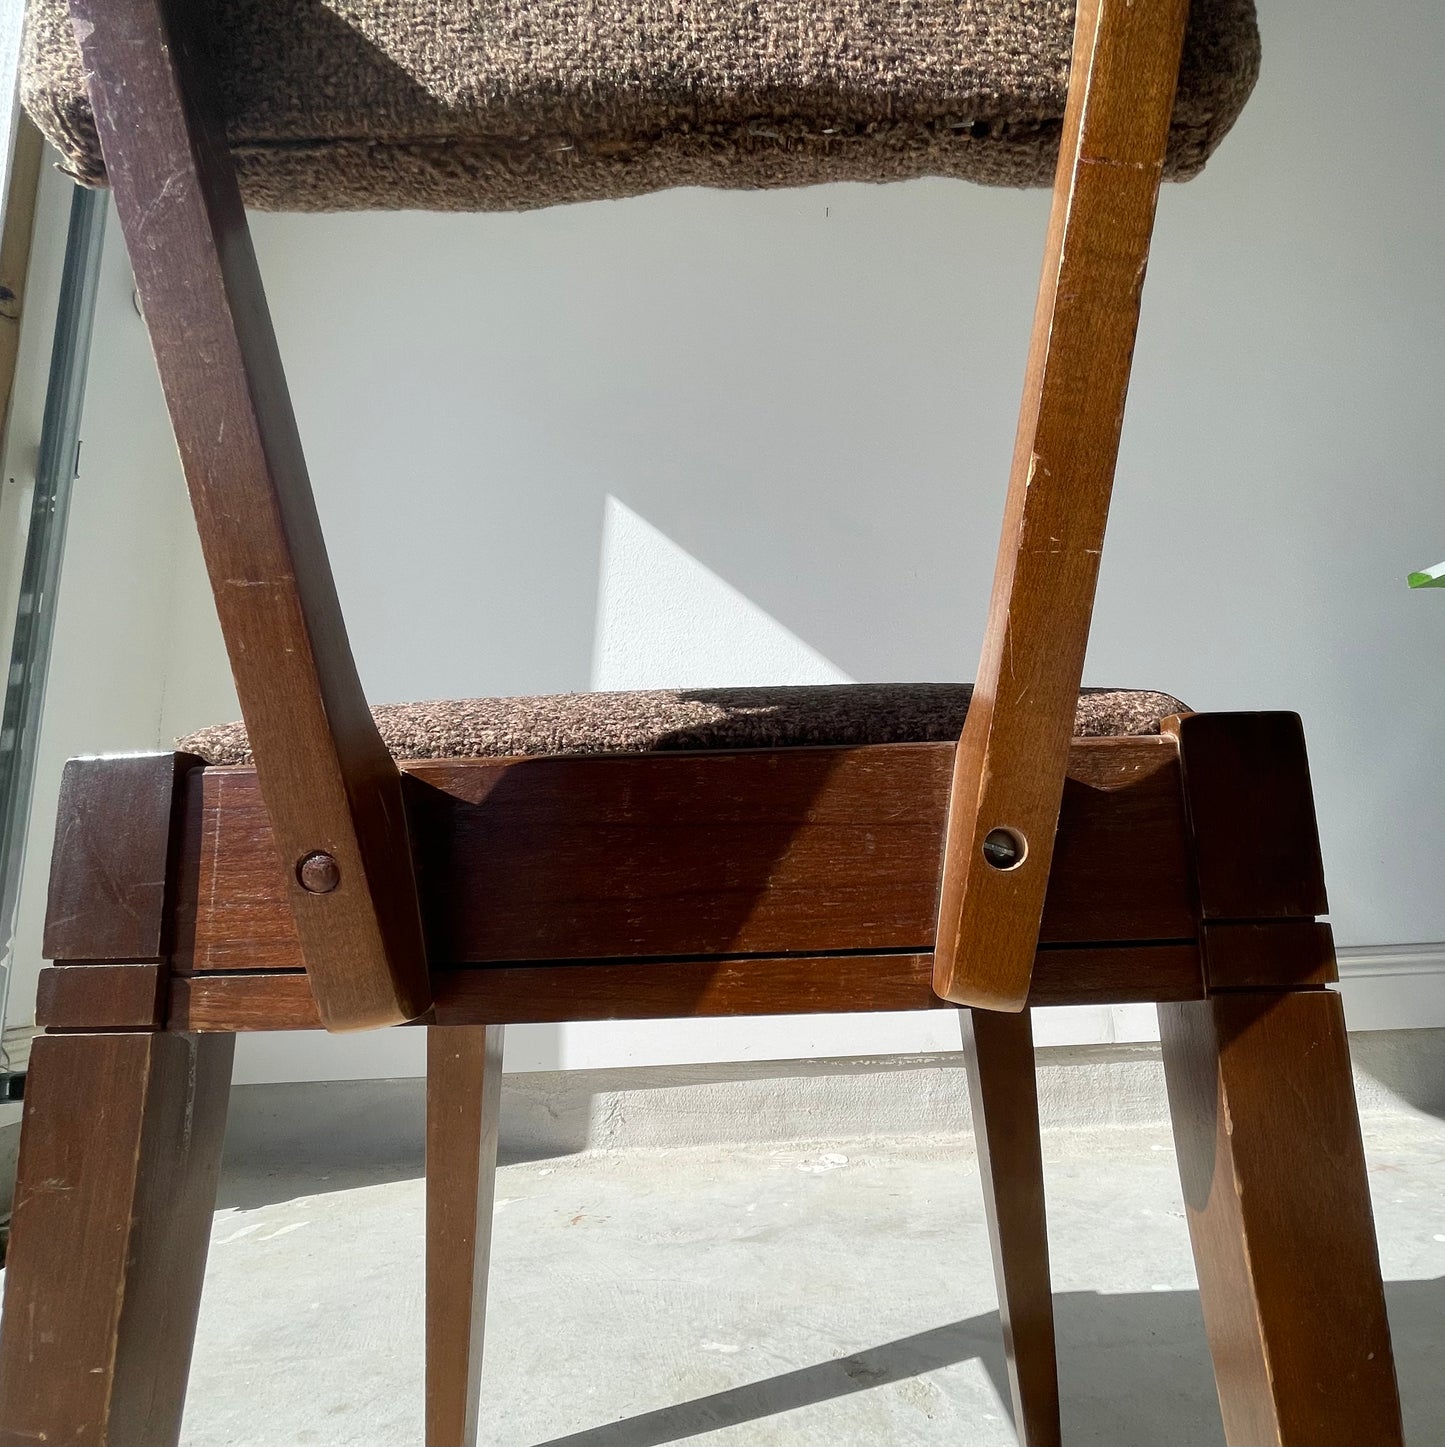 1960s Vintage Mid-Century Modern Singer Company Tweed Sewing Chair